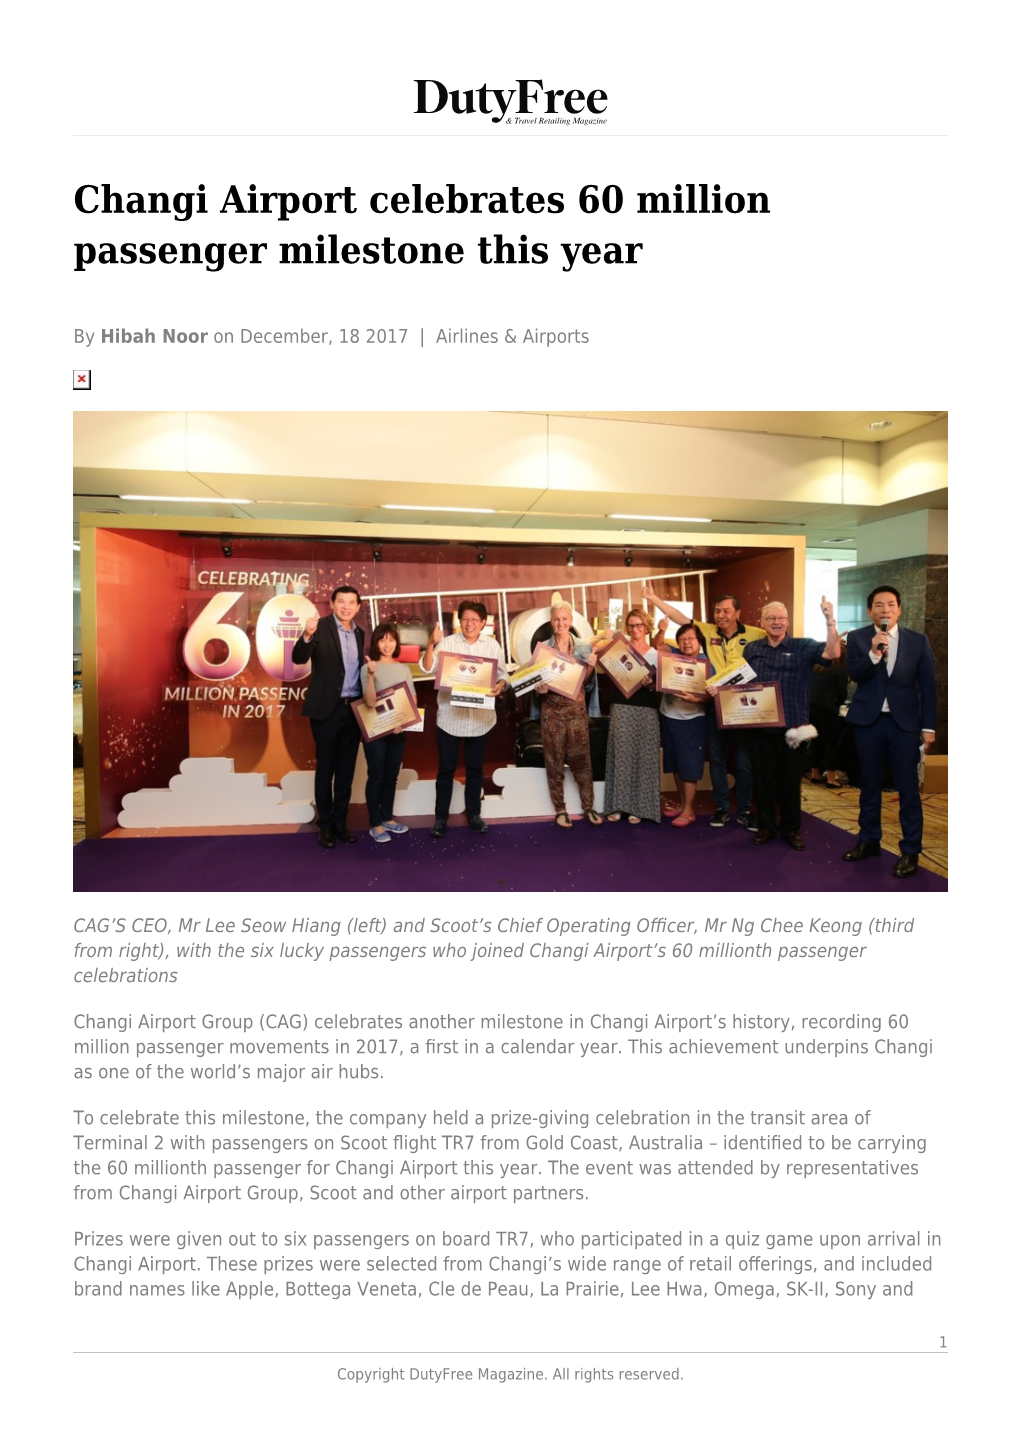 Changi Airport Celebrates 60 Million Passenger Milestone This Year